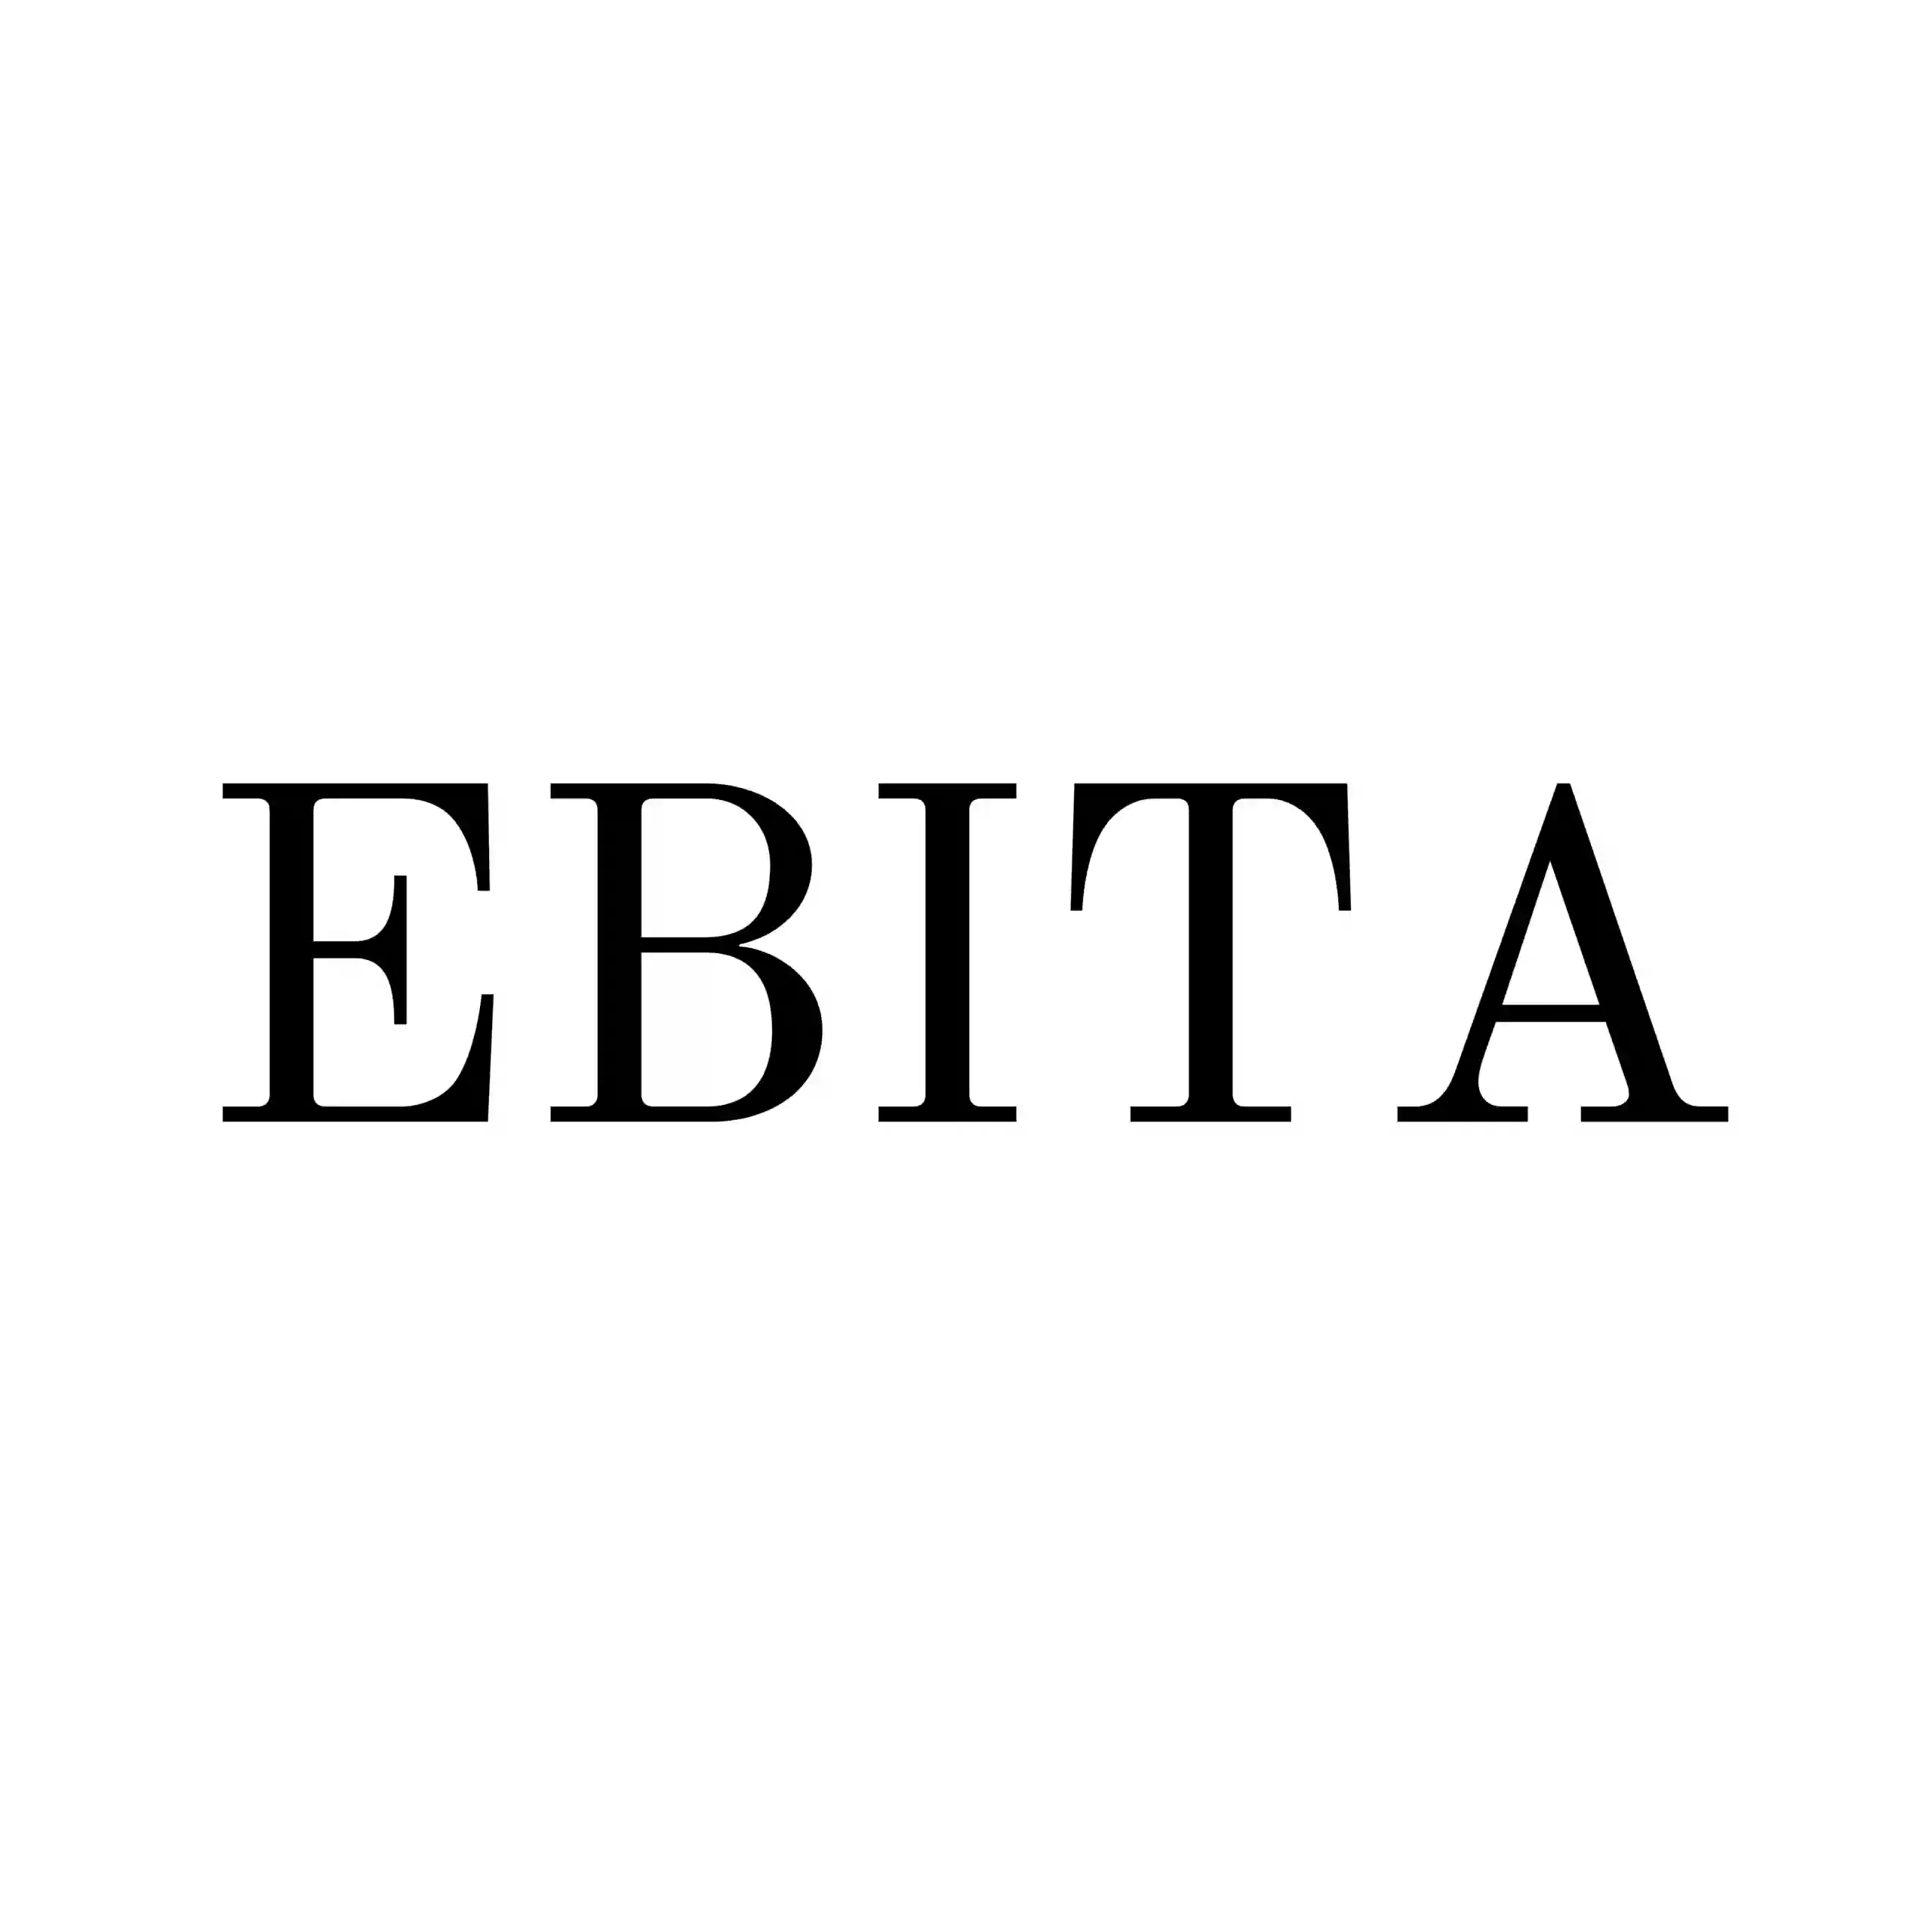 EBITA Consulting GmbH